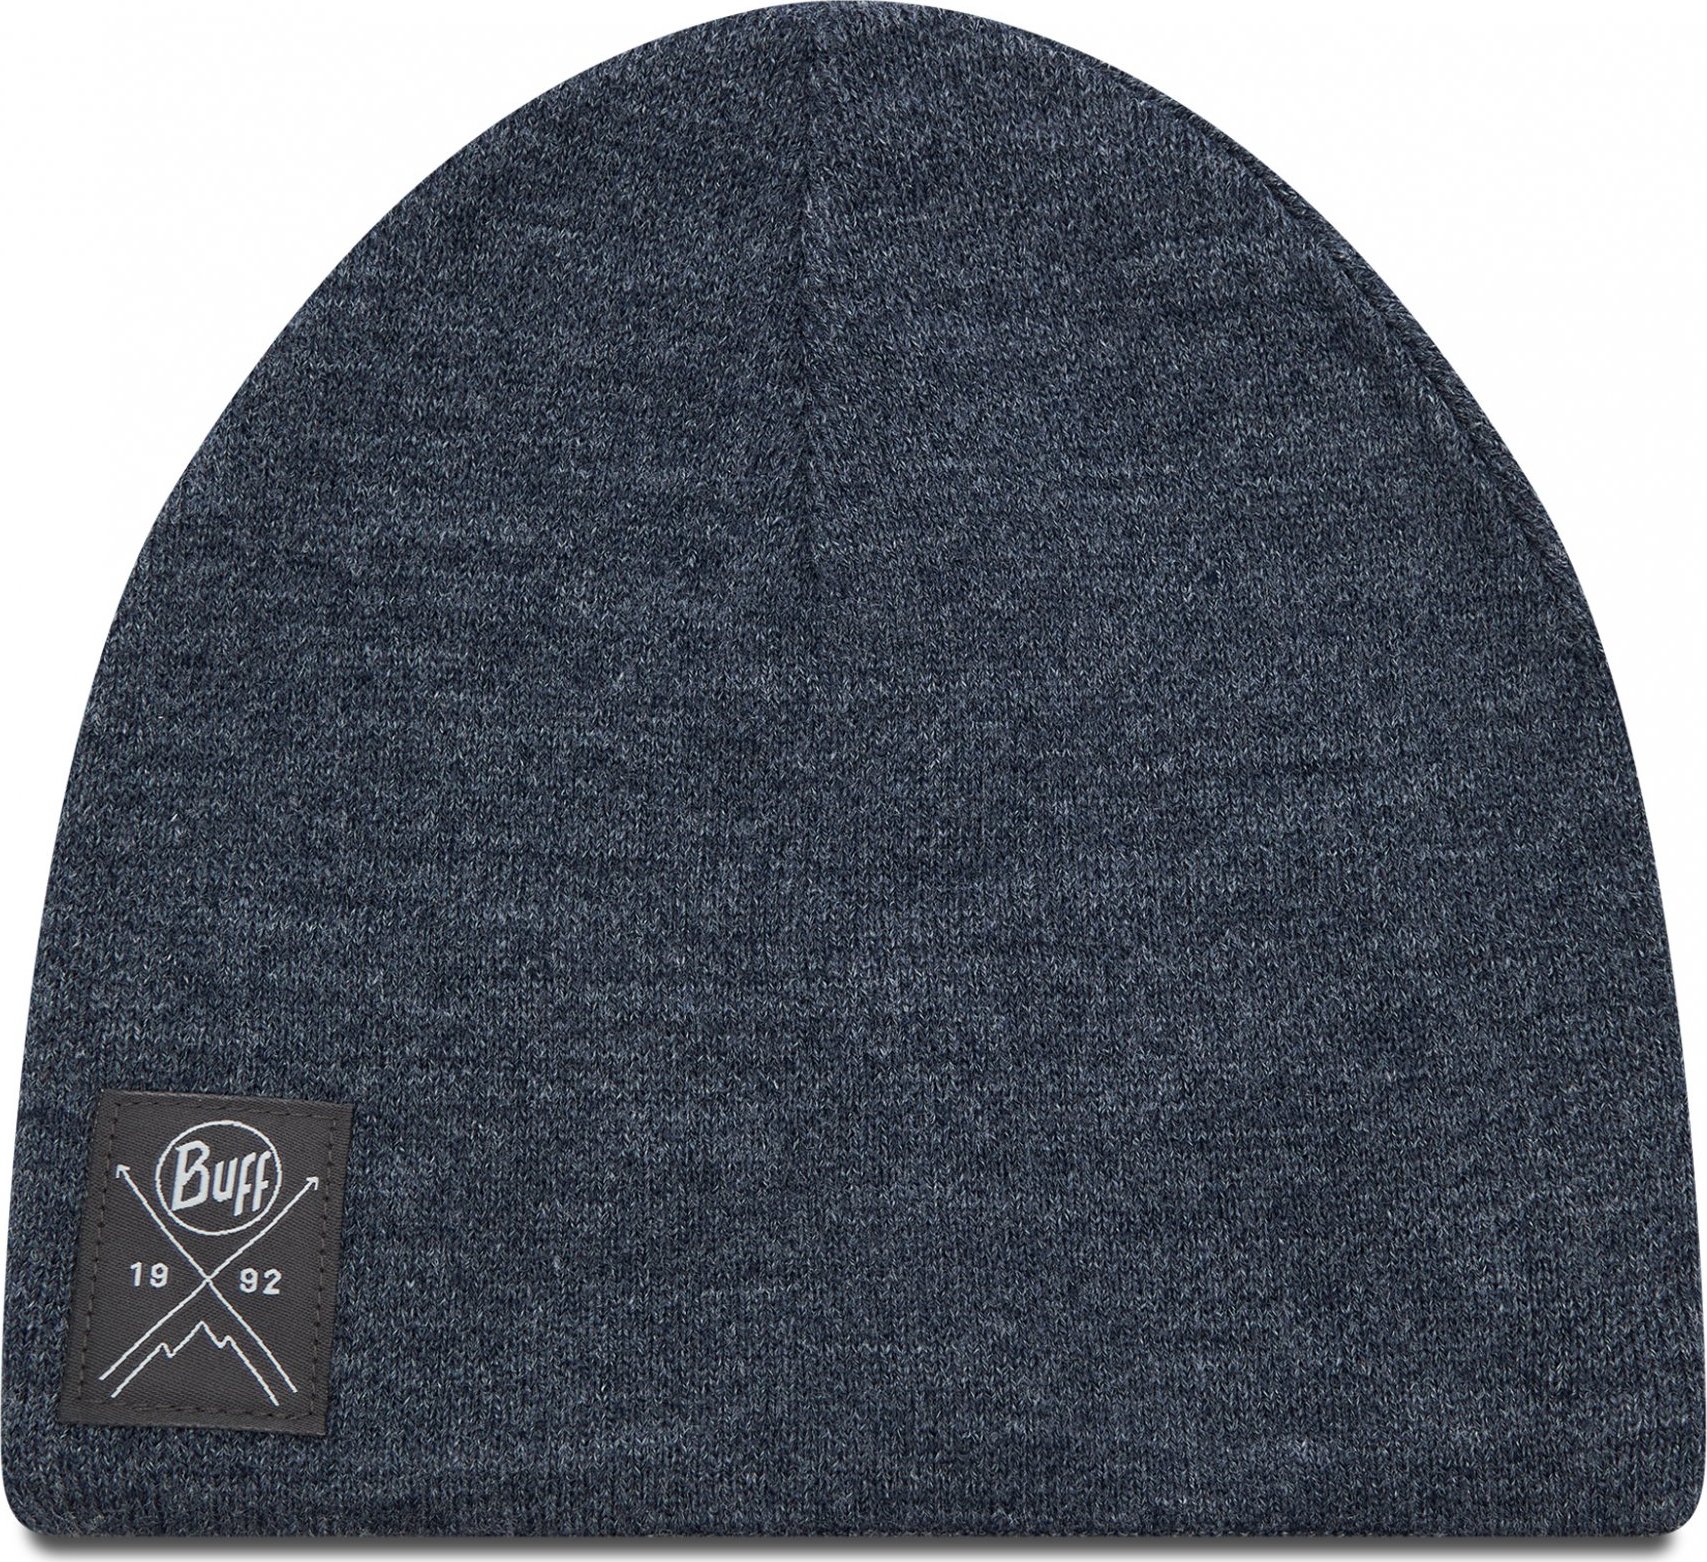 Buff Knitted & Polar Hat 113519.787.10.00